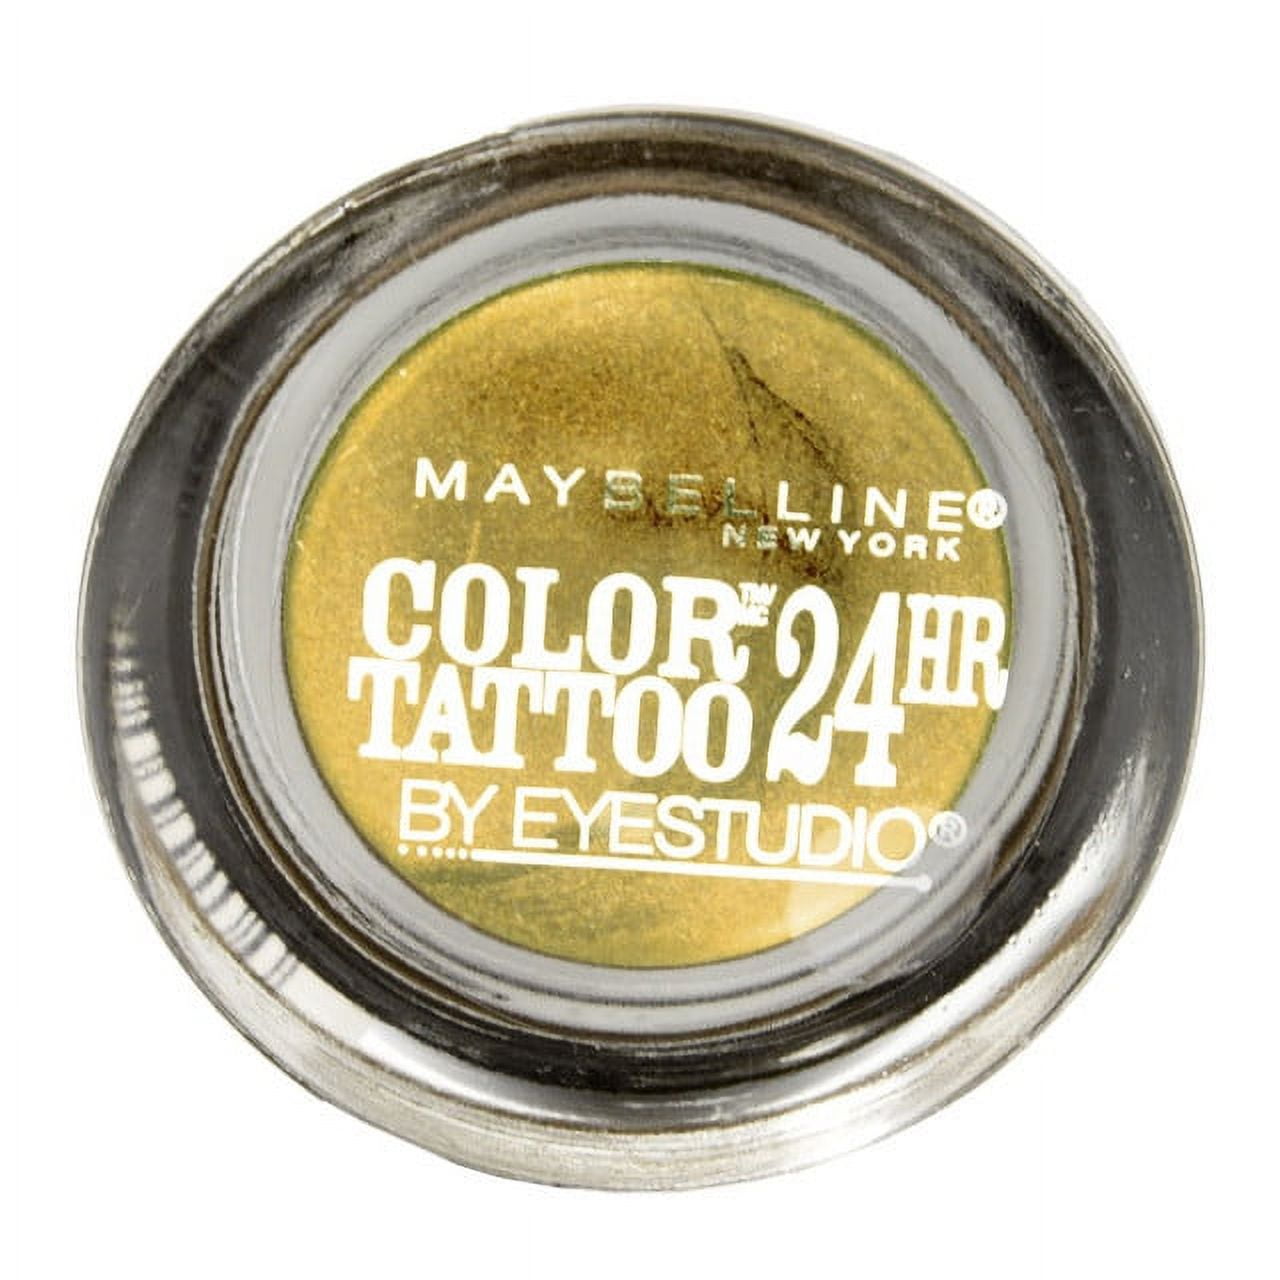 Maybelline Eye Studio - (2-Pack) 24Hr Shadow Tattoo Gold Eye Color 65 Rush